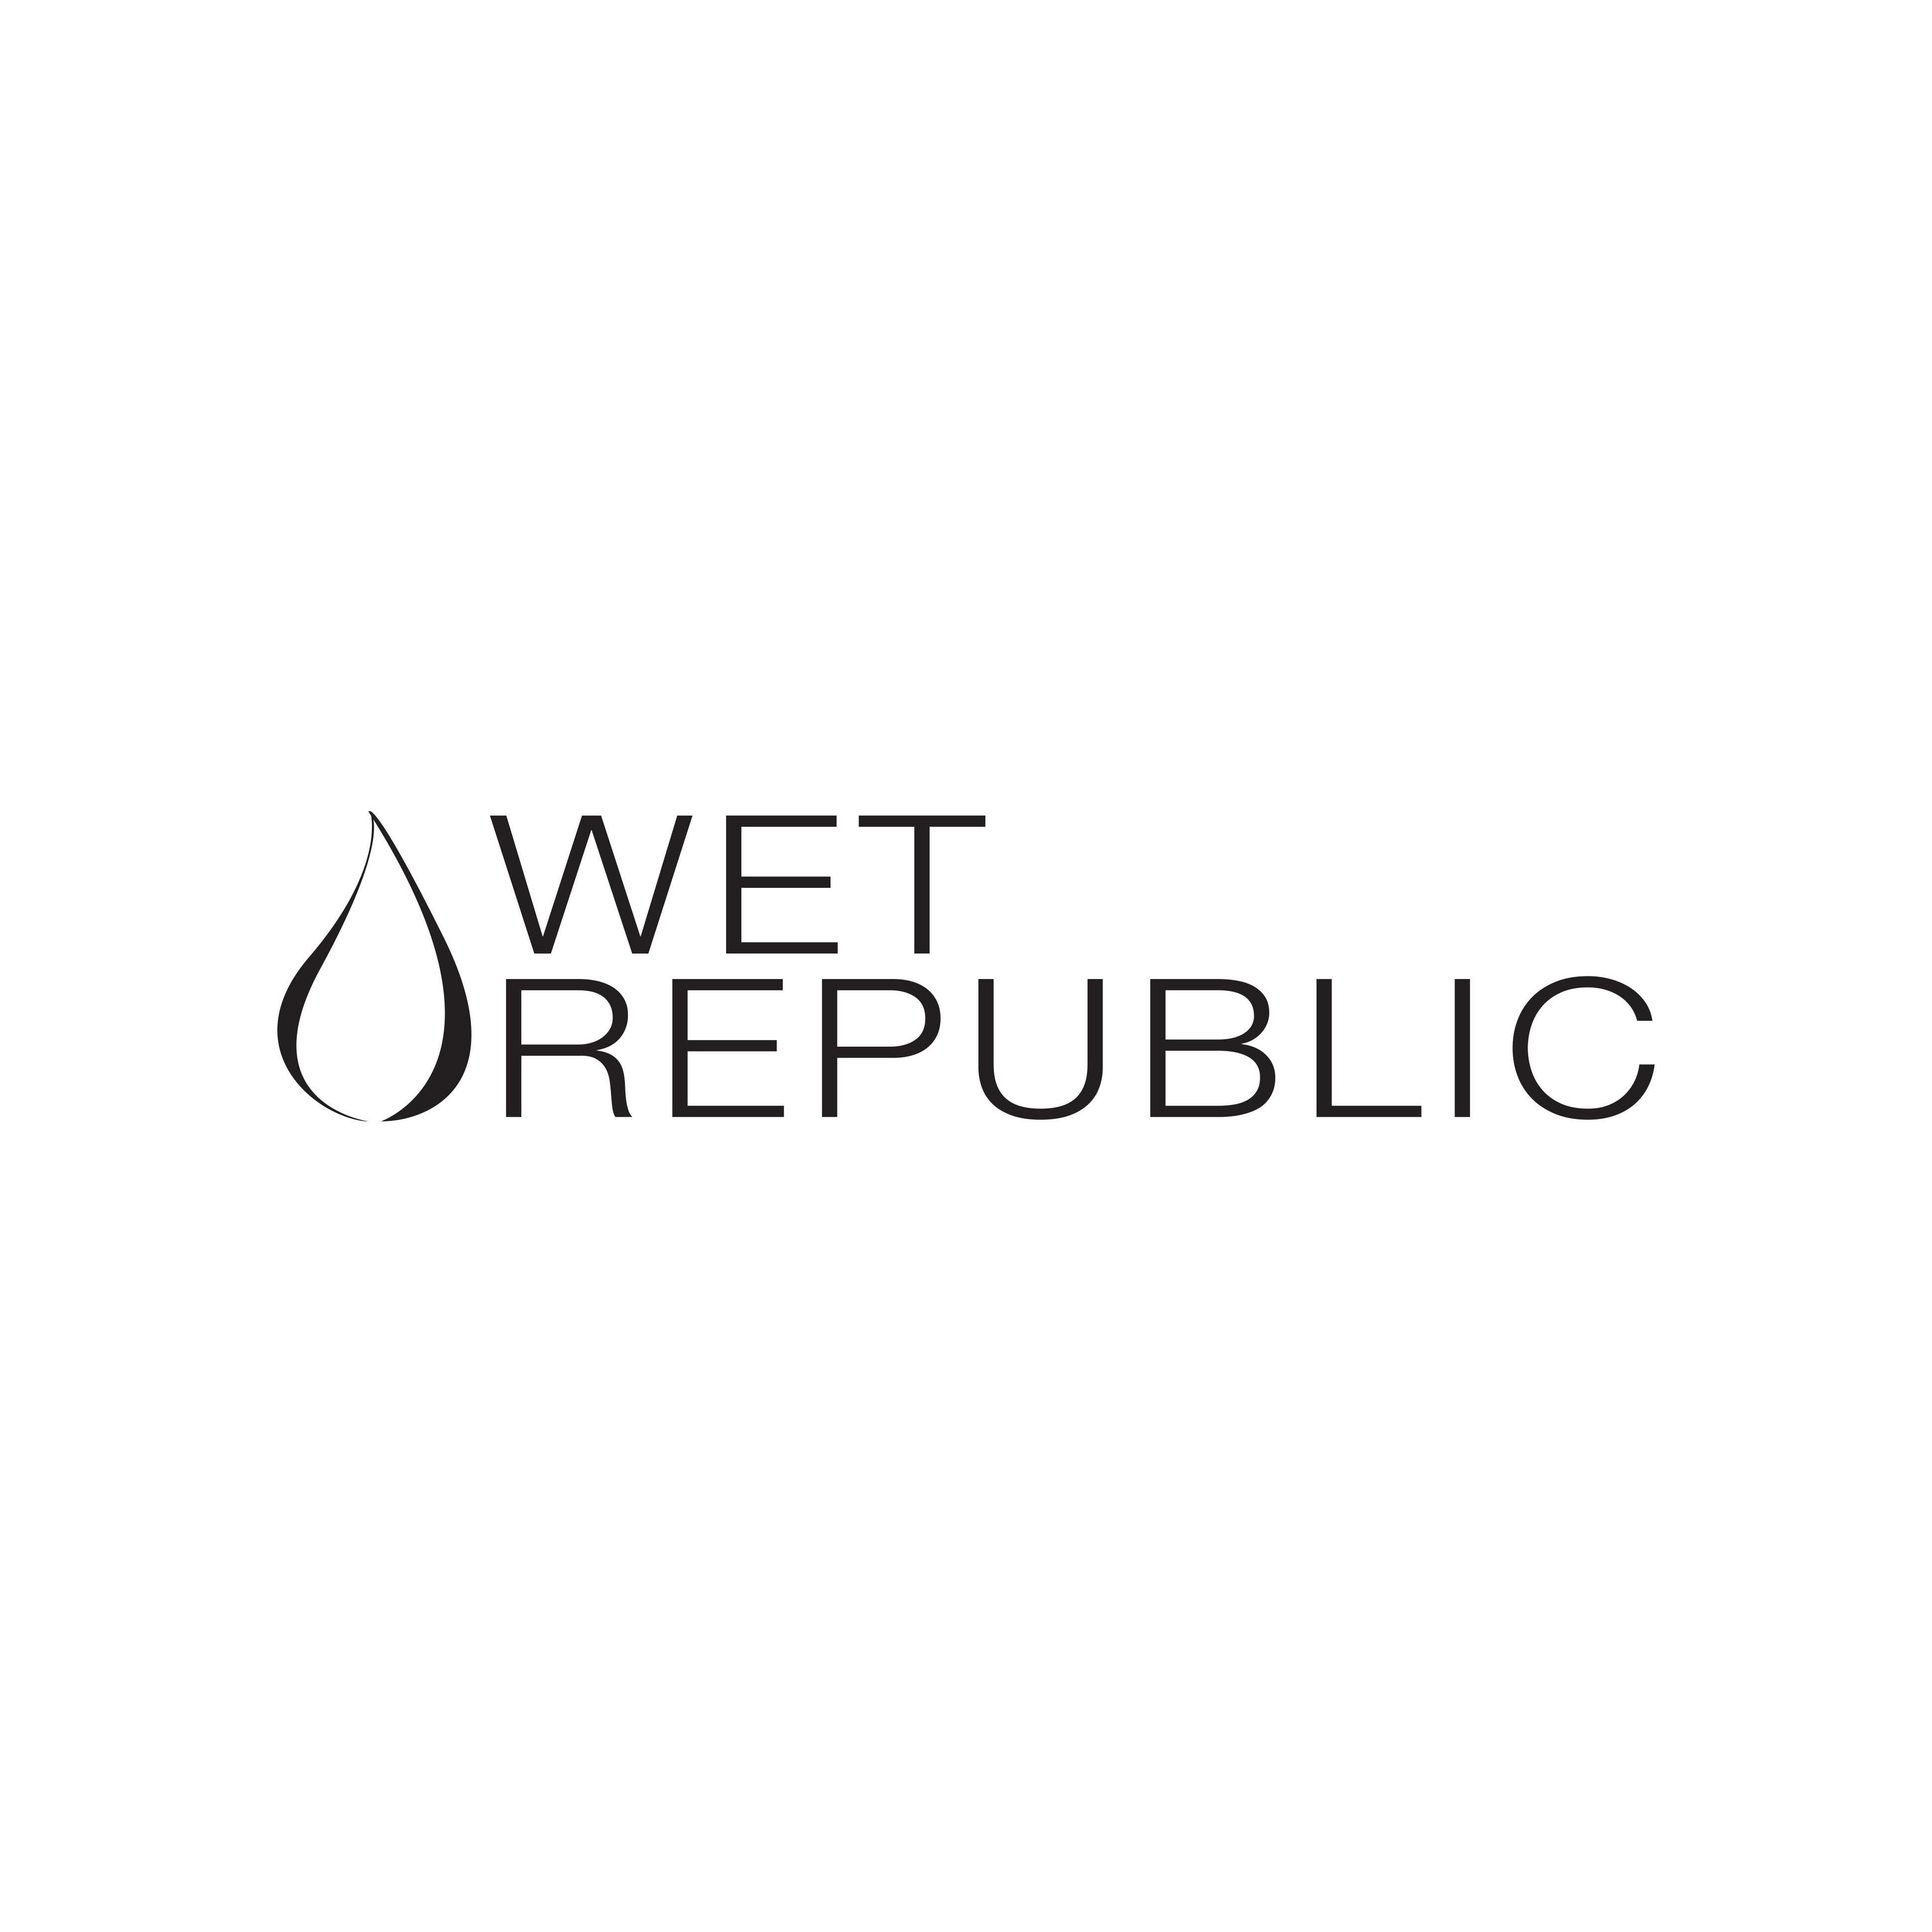 Wet Republic Ultra Pool - Las Vegas, NV 89109 - (702)891-3563 | ShowMeLocal.com